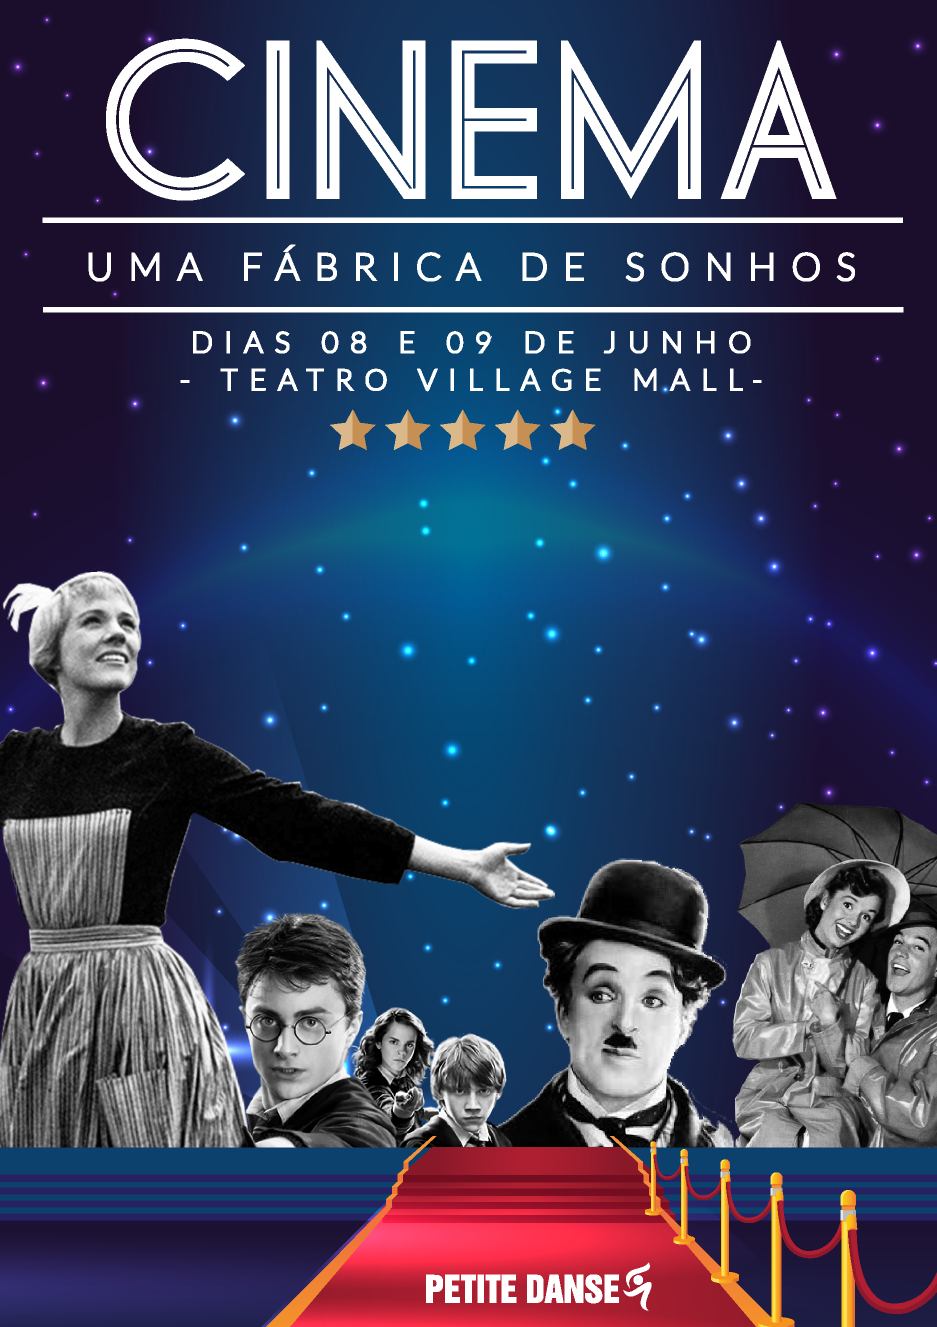 Cinema, uma fábrica de sonhos (Teatro Village Mall)